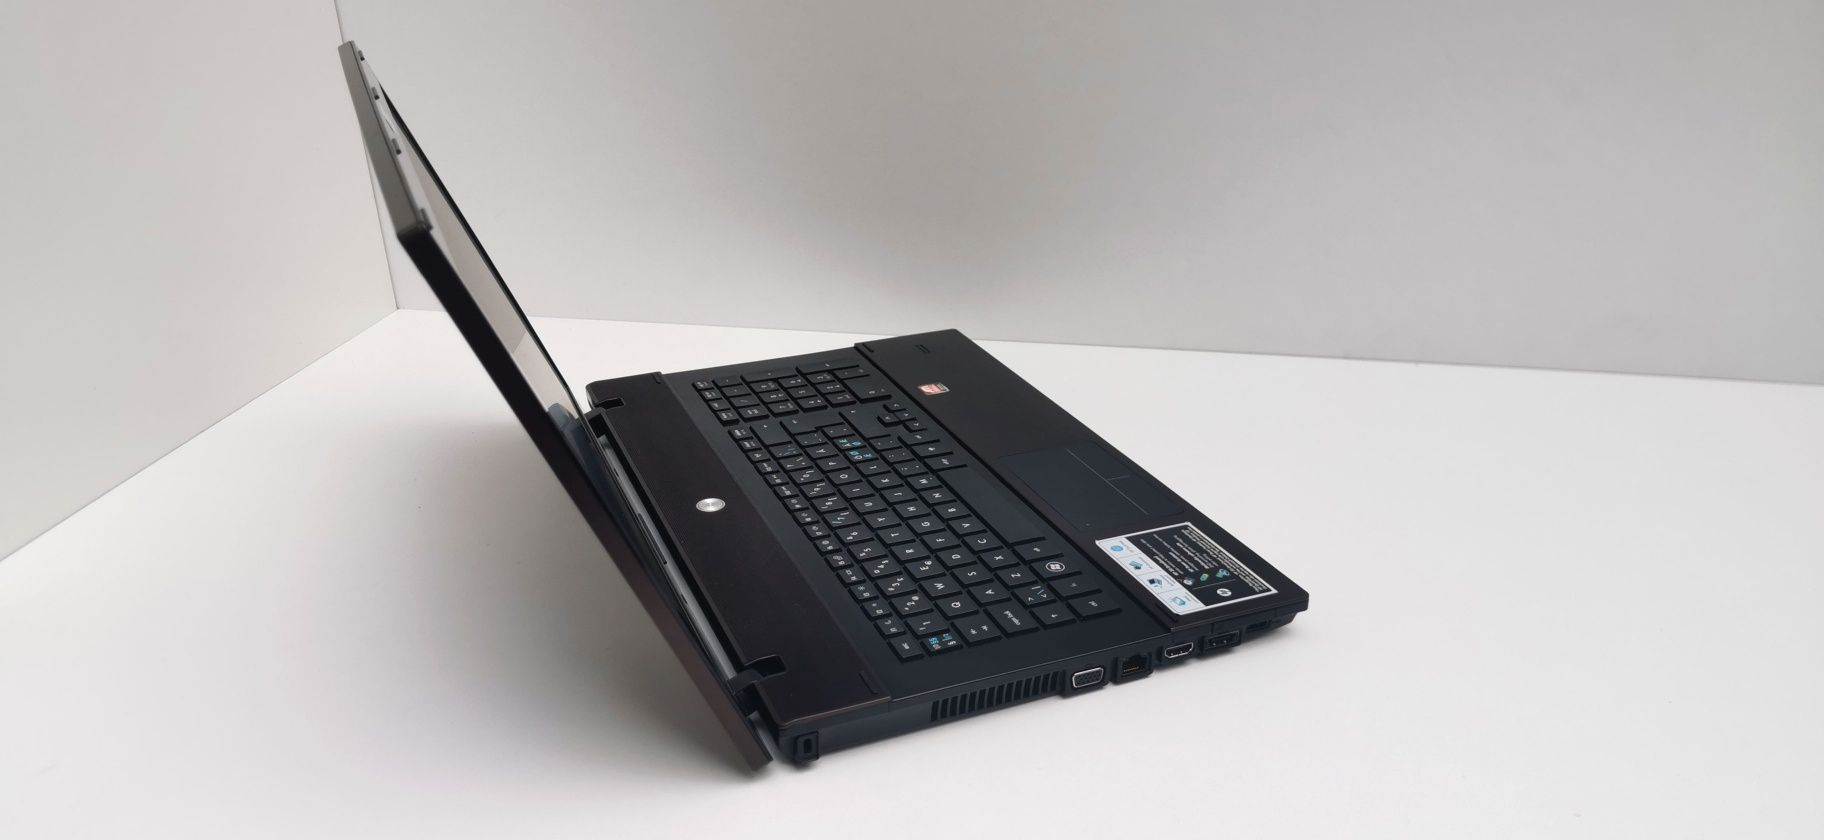 Laptop HP ProBook 4720s - i7 M620, 17.3", 500 GB HDD, AMD Radeon